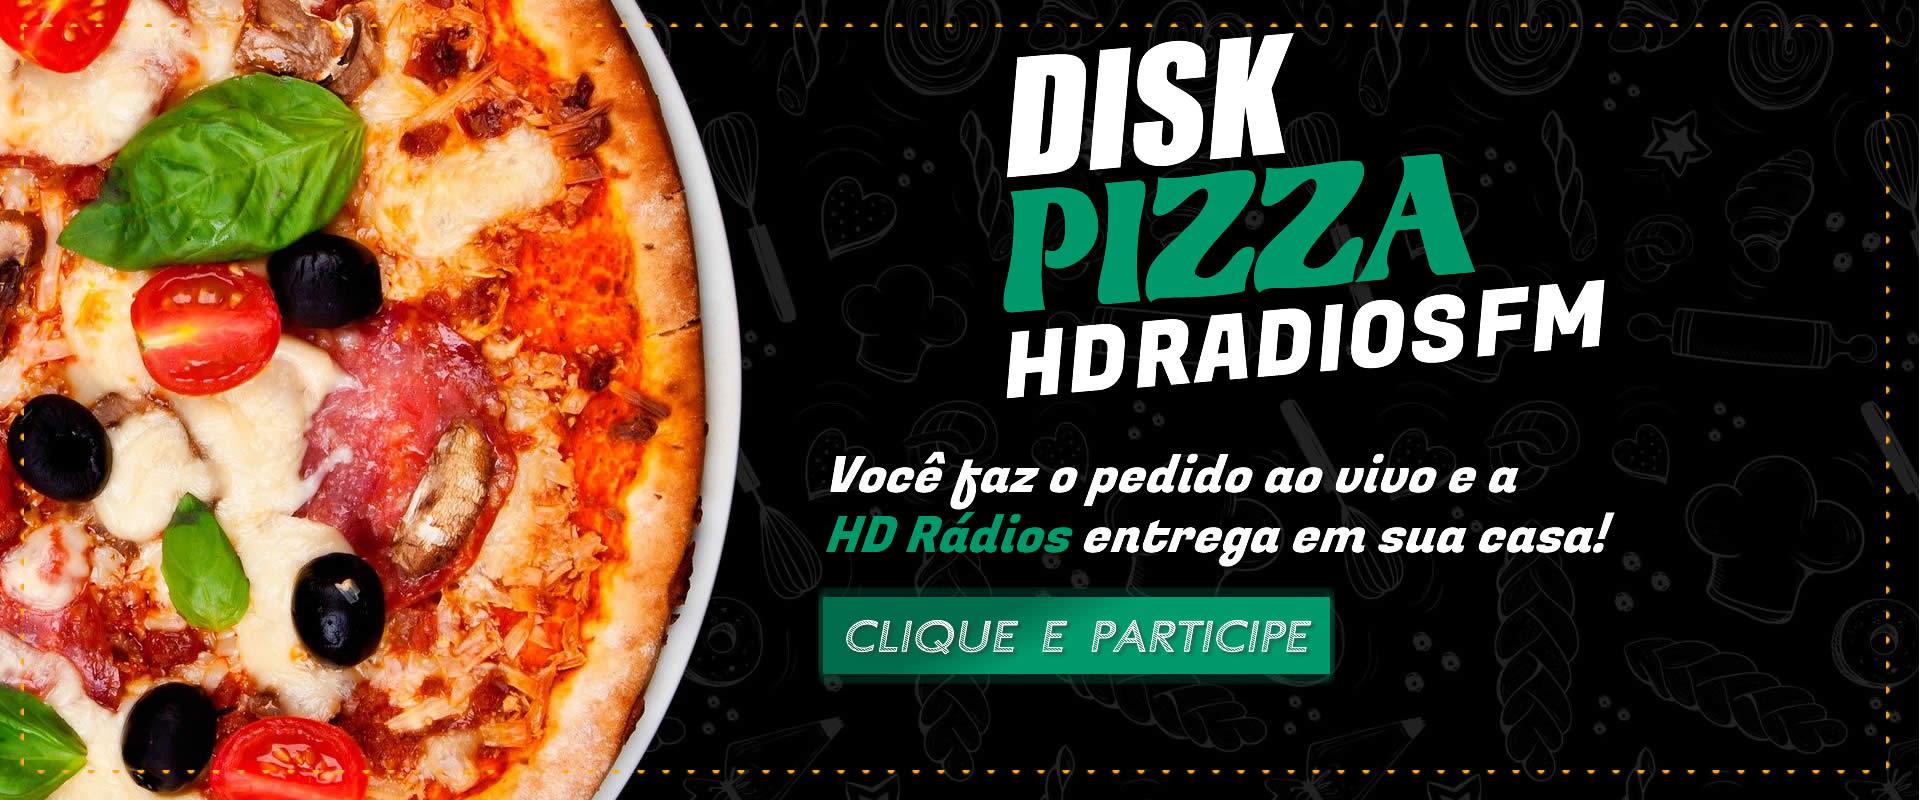 Disk Pizza HD Rádios FM